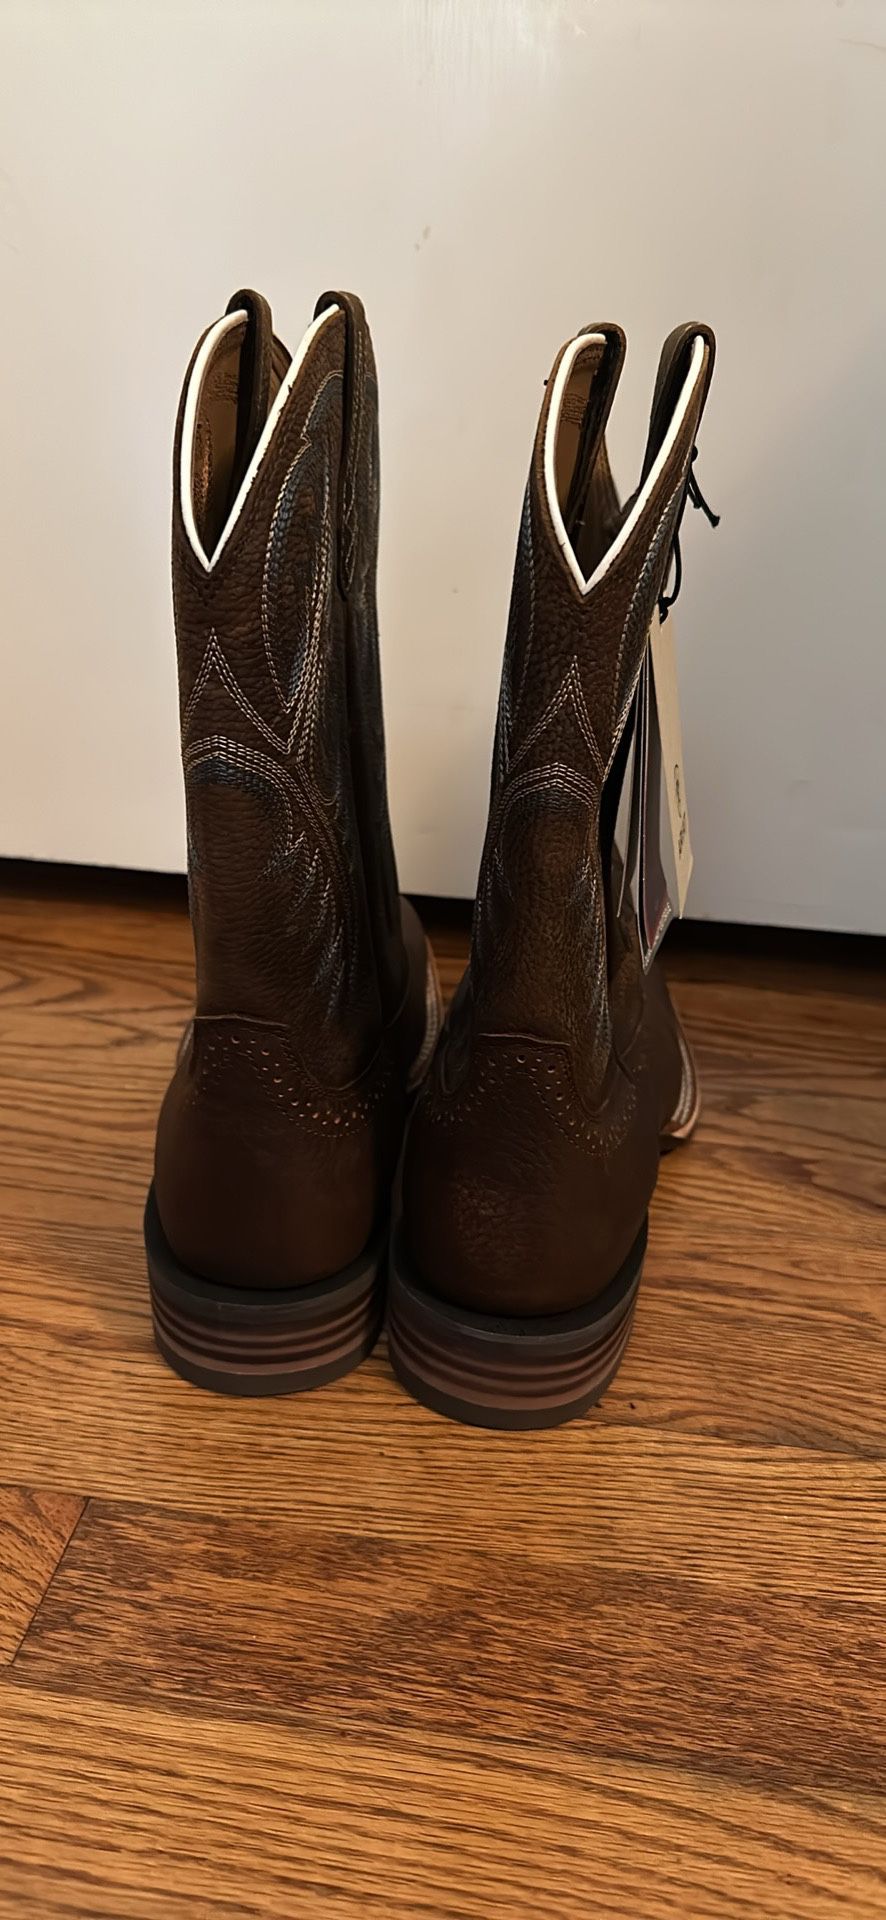 Ariat Cowboy Boots Size 12 